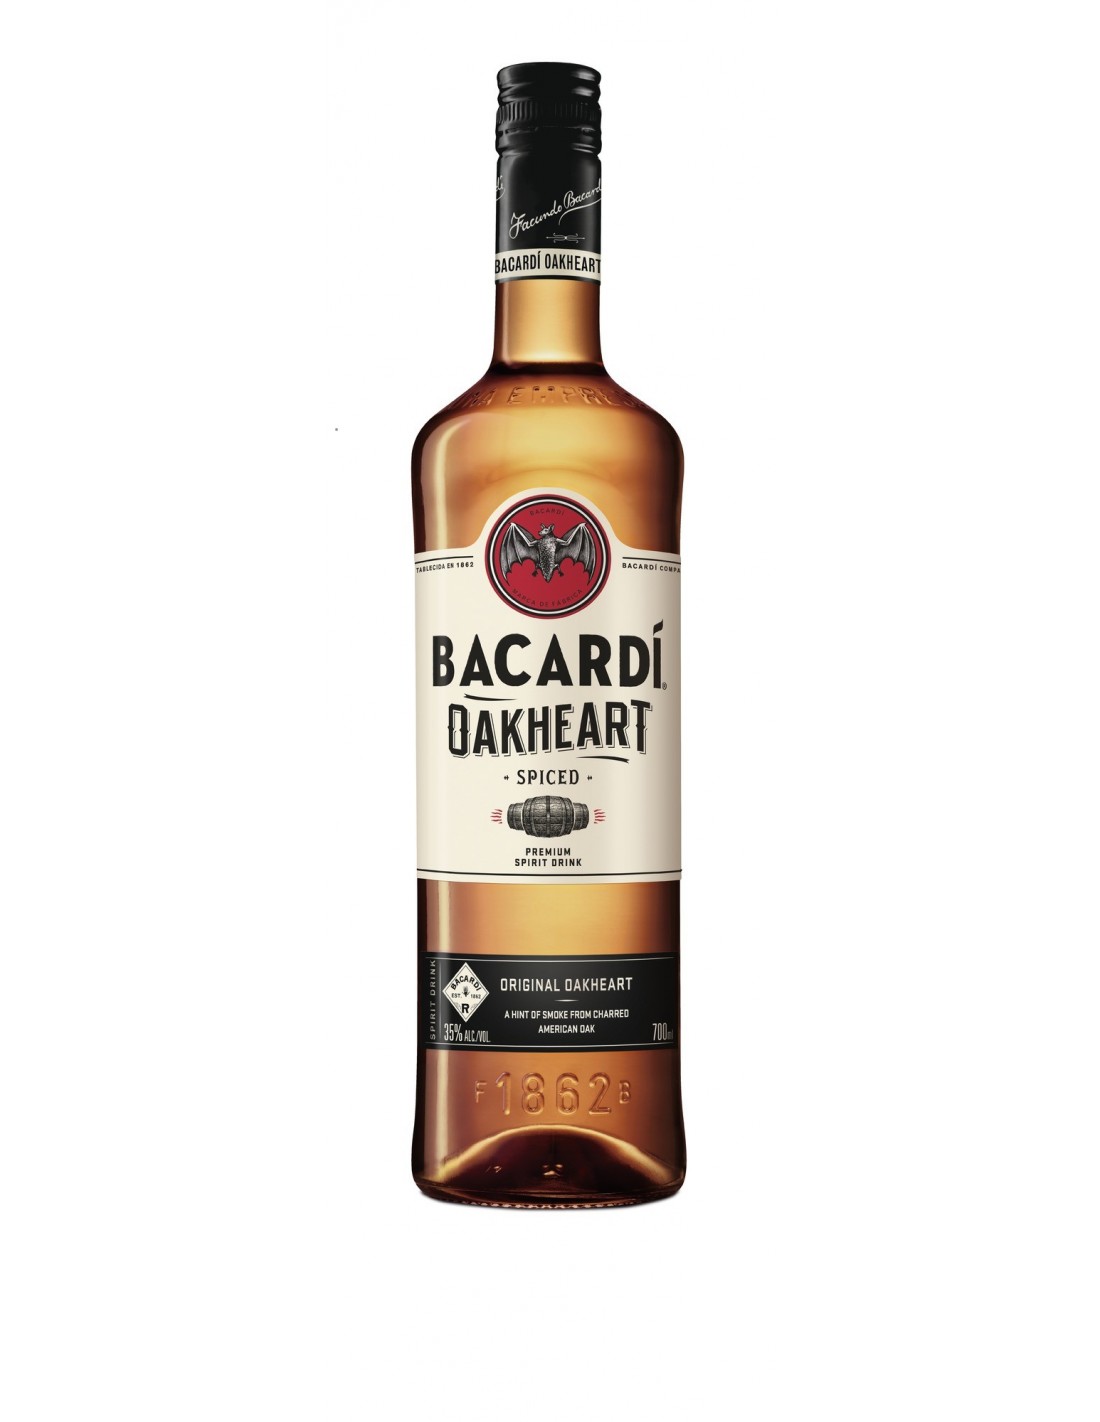 Rom Bacardi Oakheart, 35% alc., 0.7L, Cuba alcooldiscount.ro